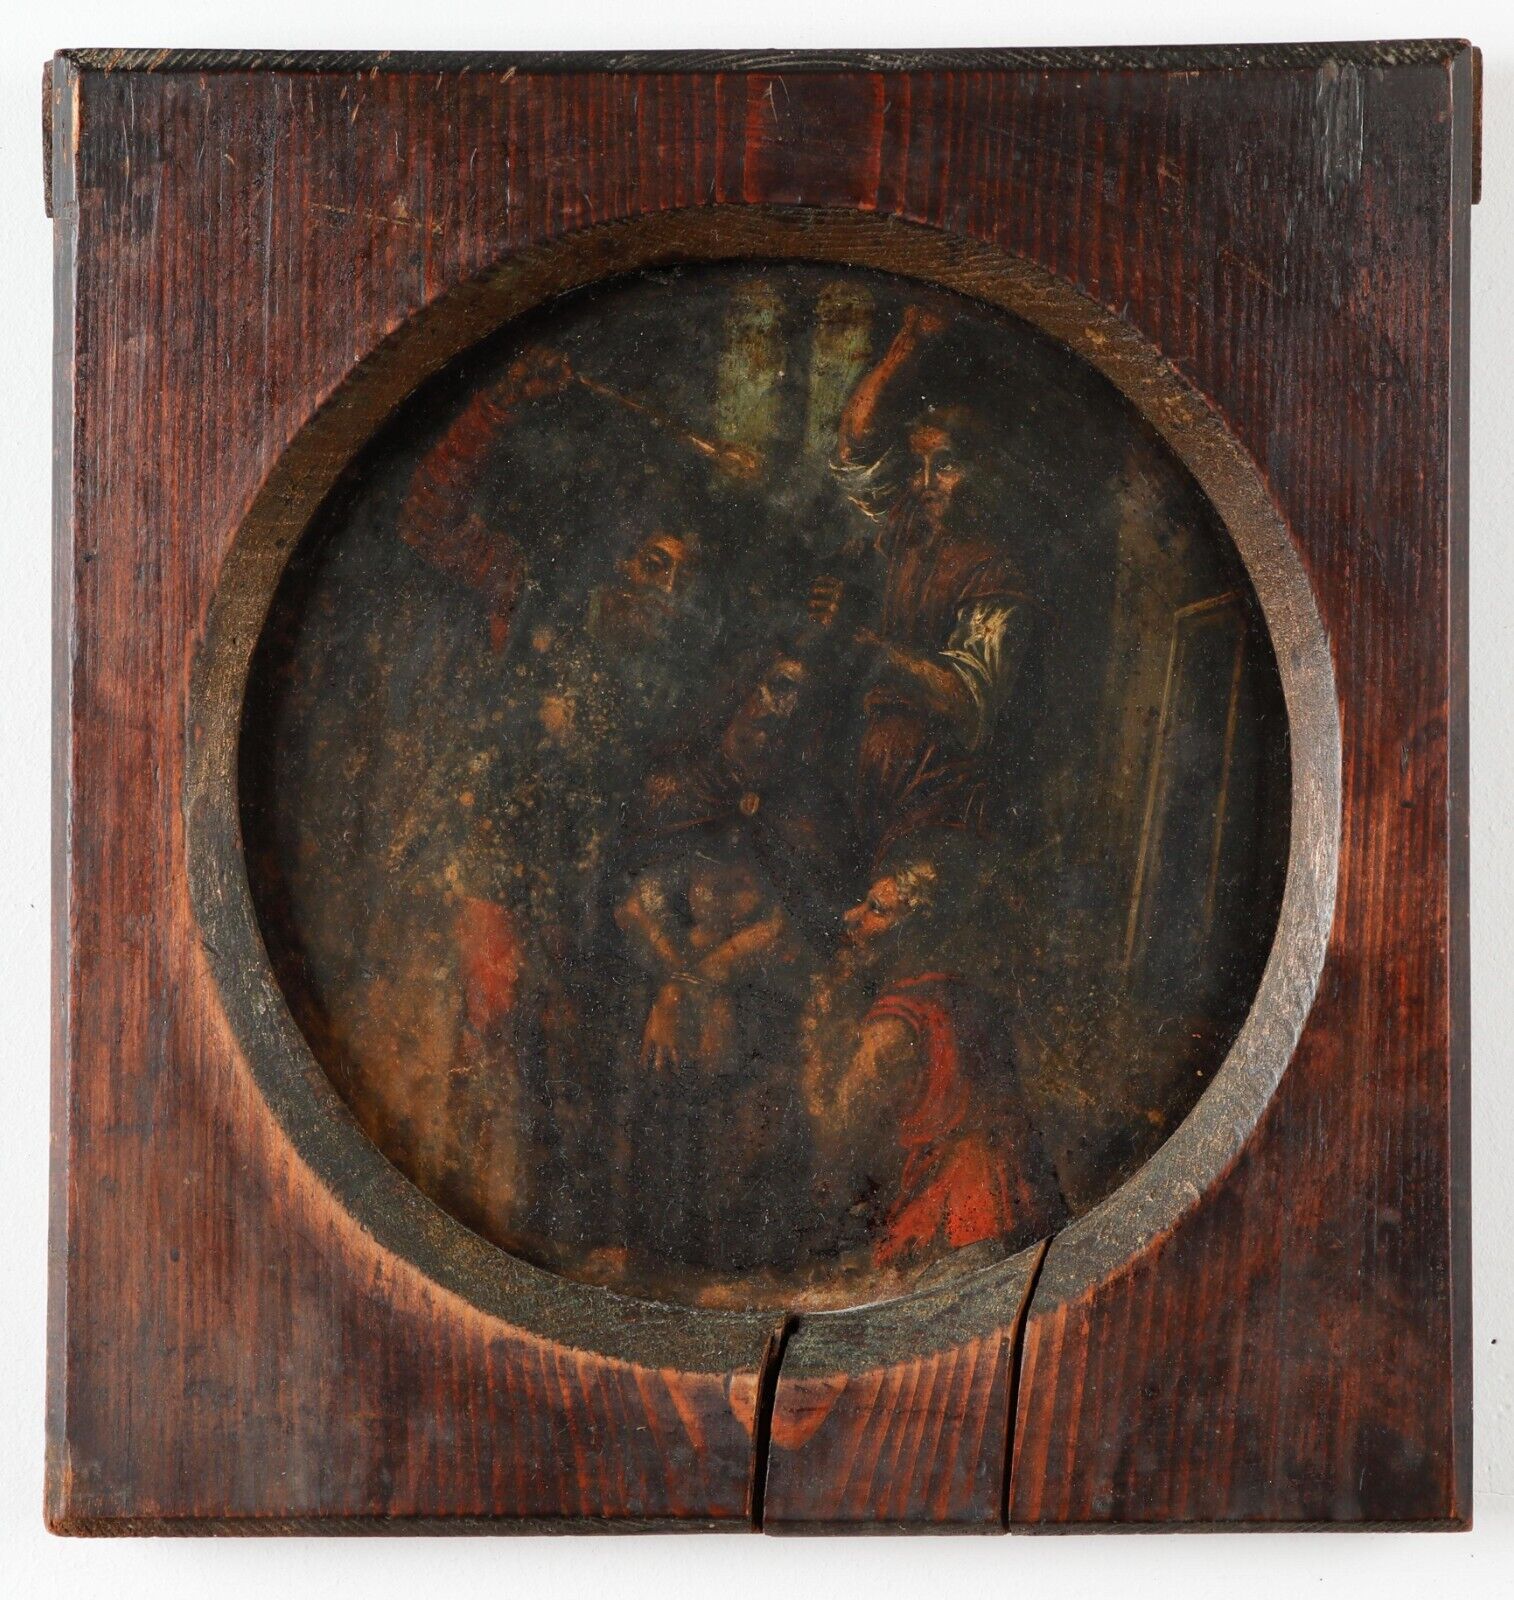 Italian School, 17th/18th Century: Mocking of Christ Oil on Slate, Old Master